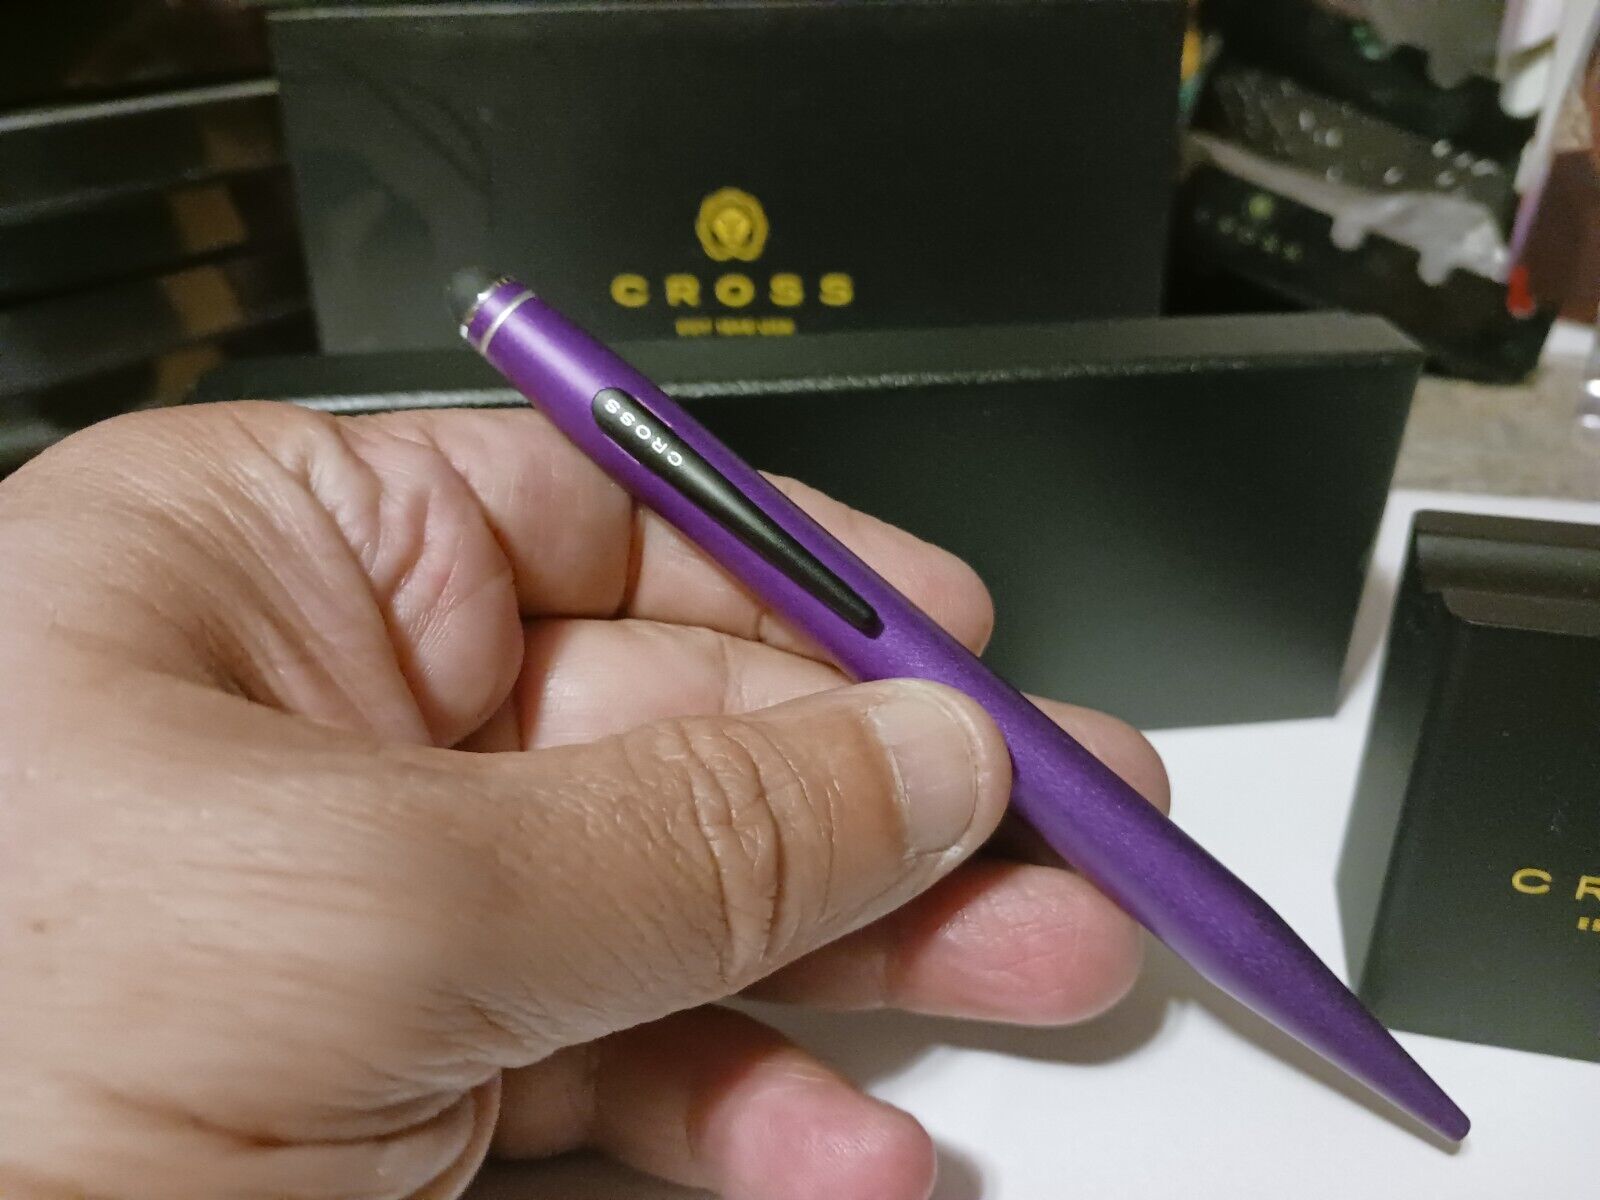 RARE Prototype Cross Tech2 Ballpoint Pen PURPLE and Stylus BIRTHDAY GIFT